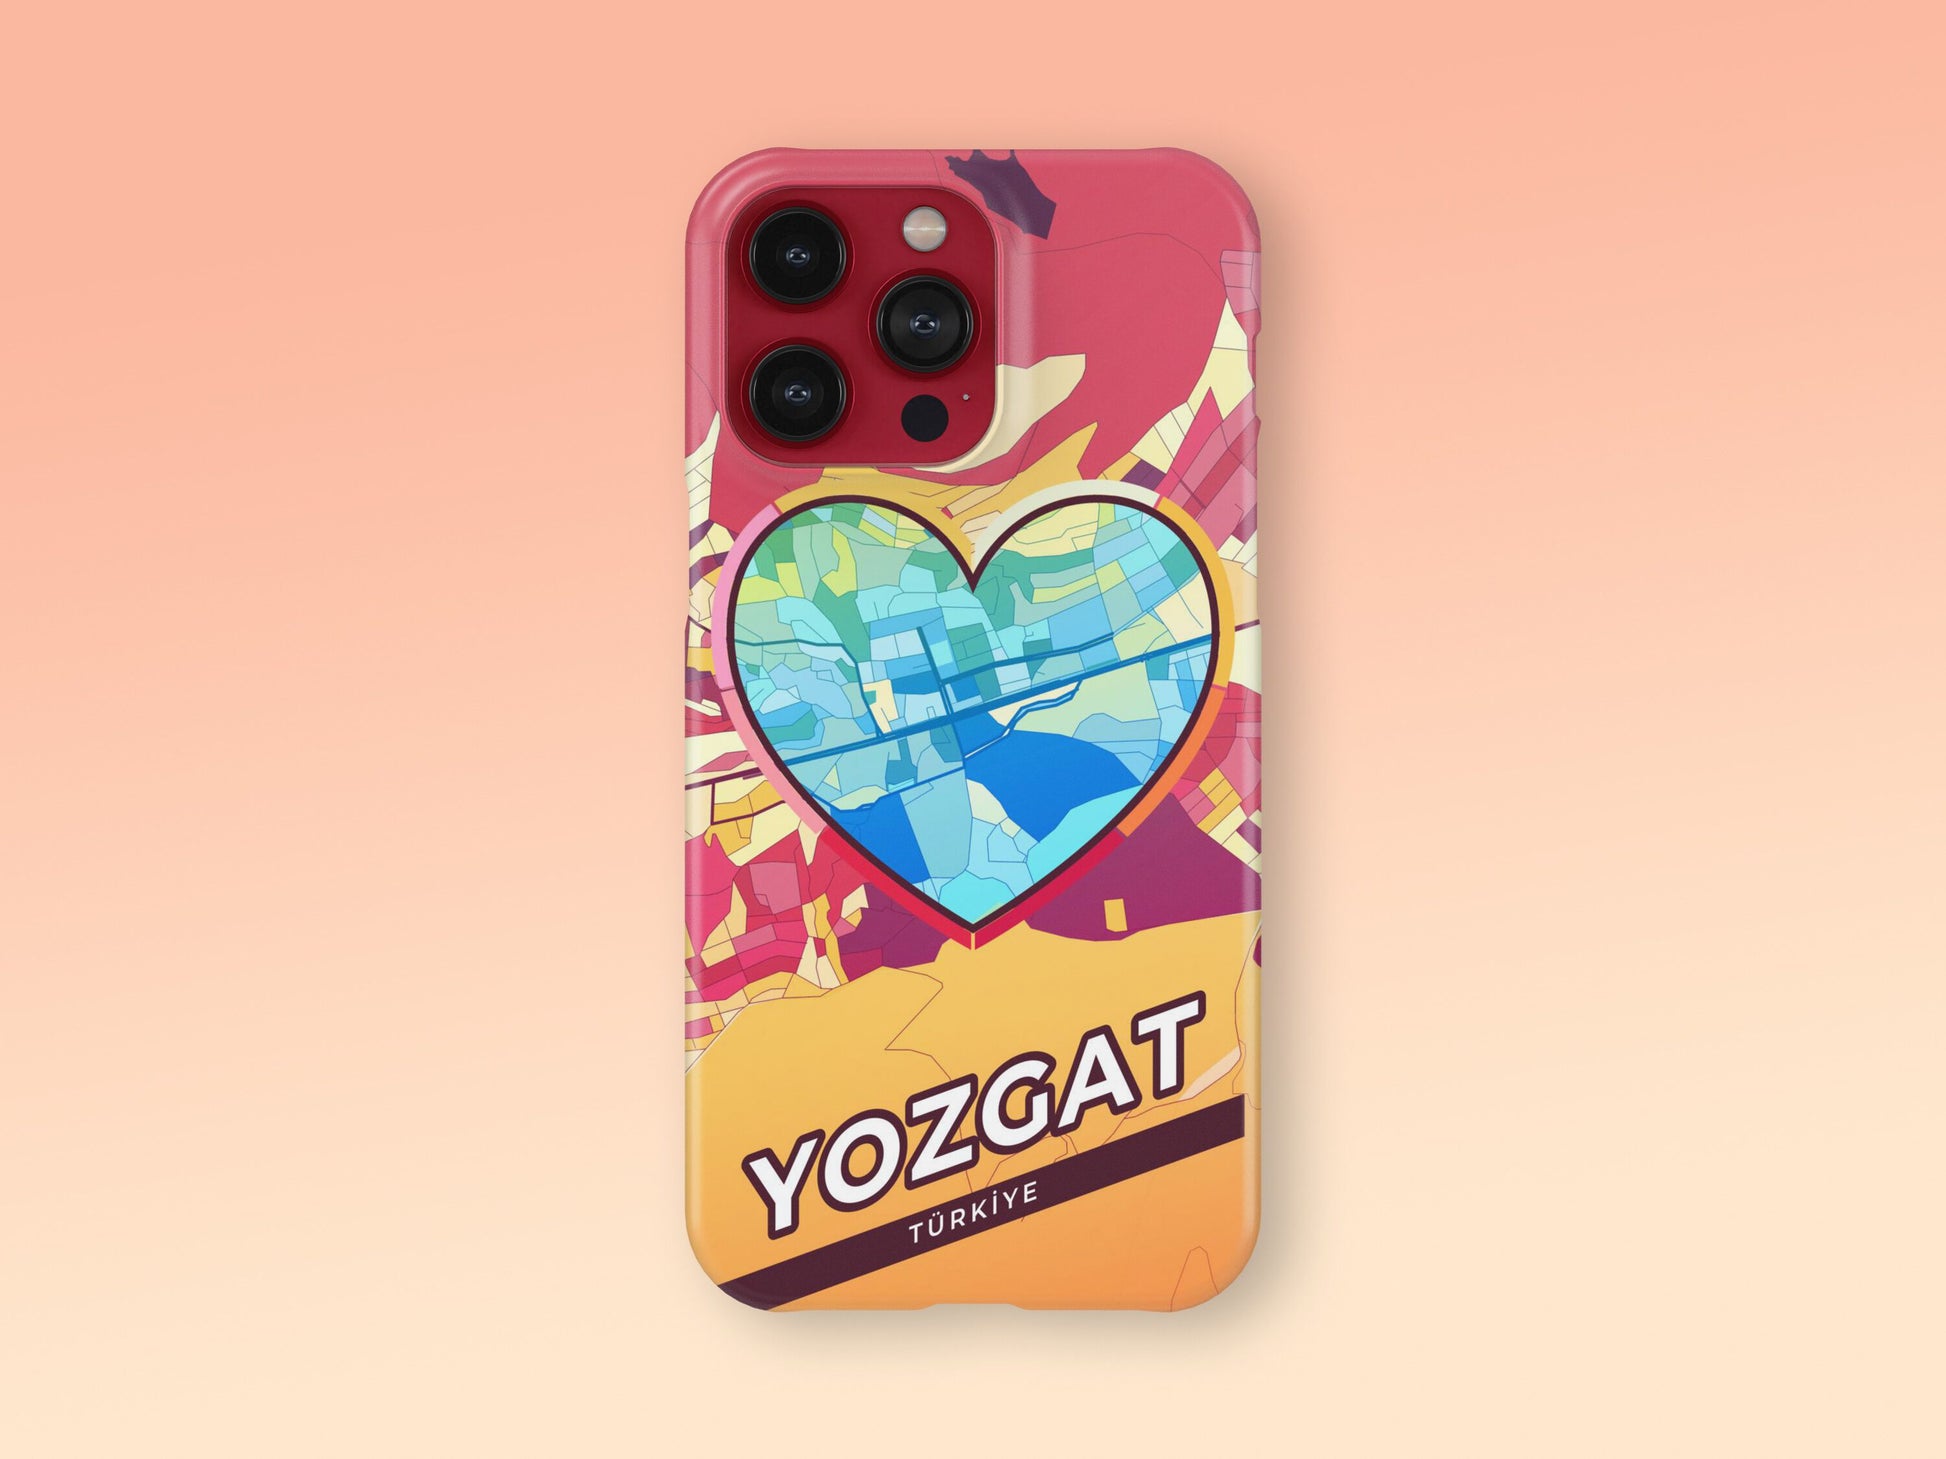 Yozgat Turkey slim phone case with colorful icon 2